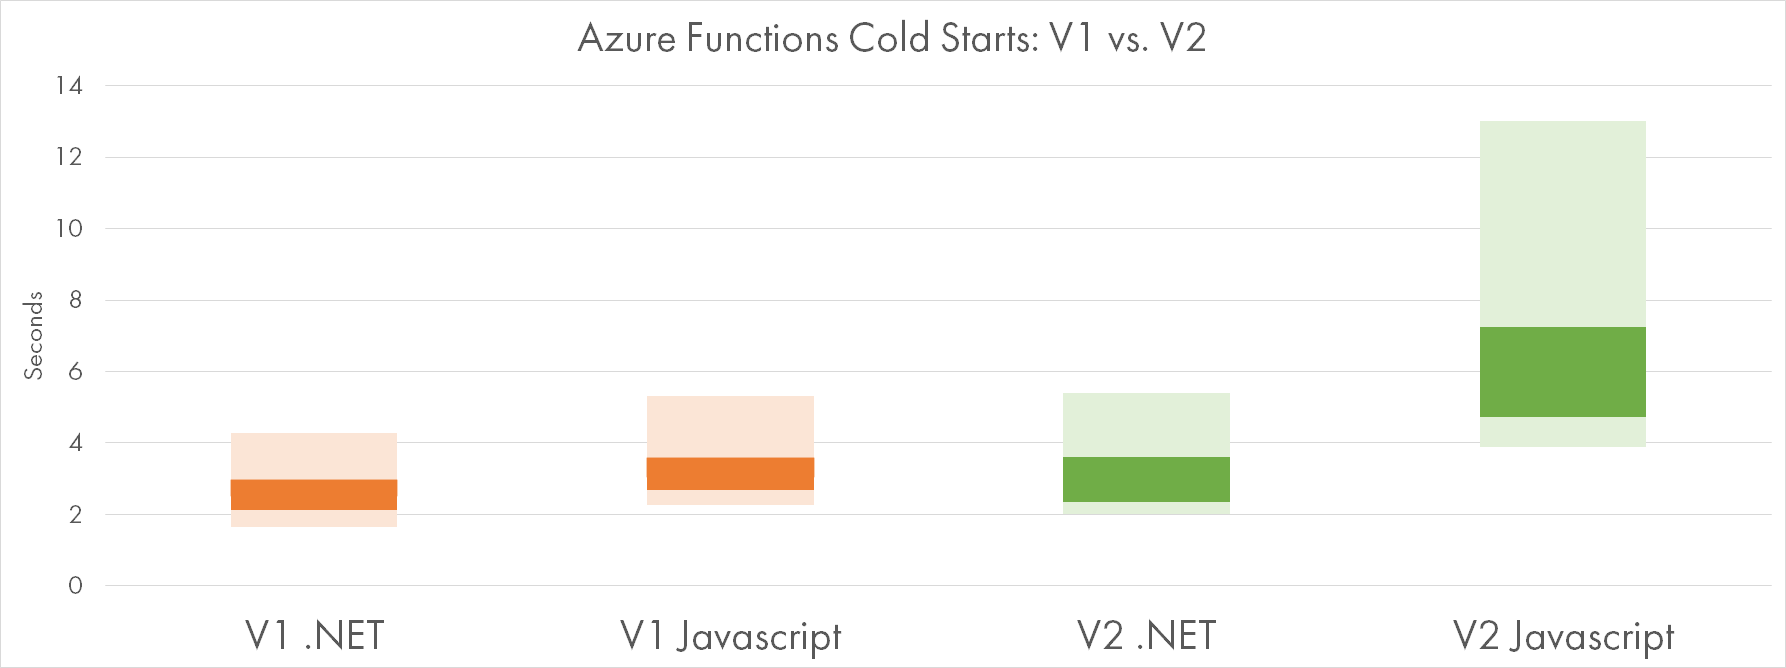 Cold Starts V1 vs V2: .NET and Javascript